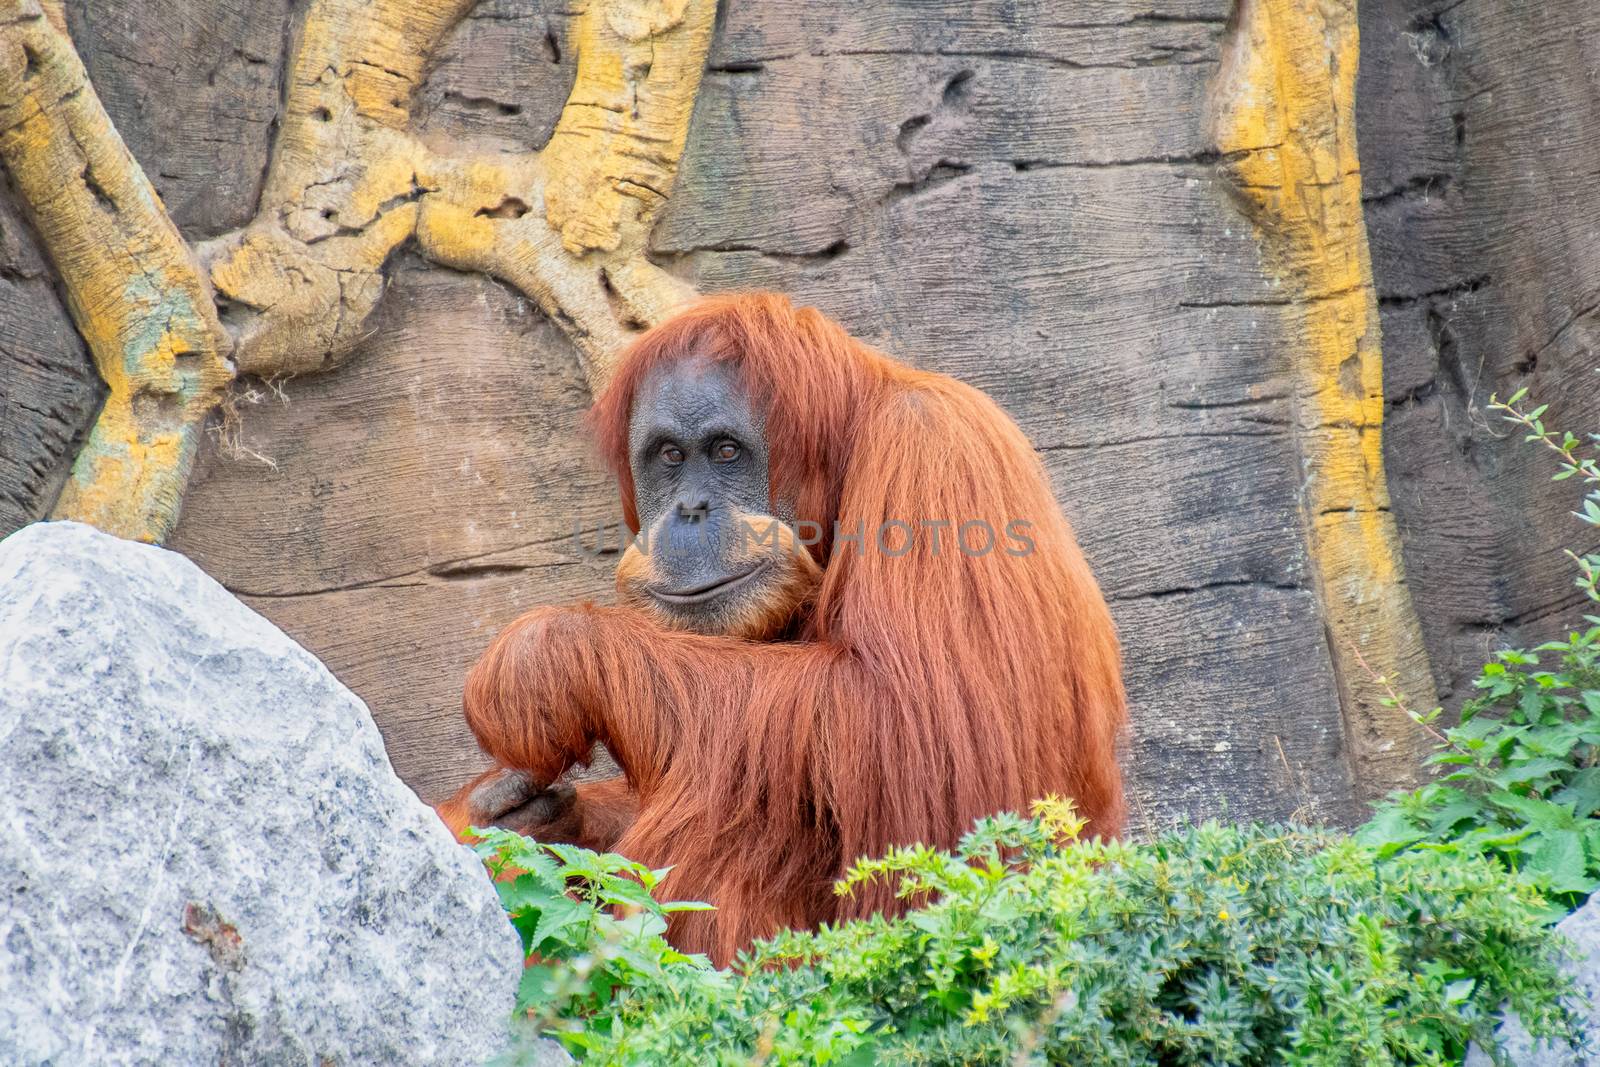 Orangutan sitting down by Russell102